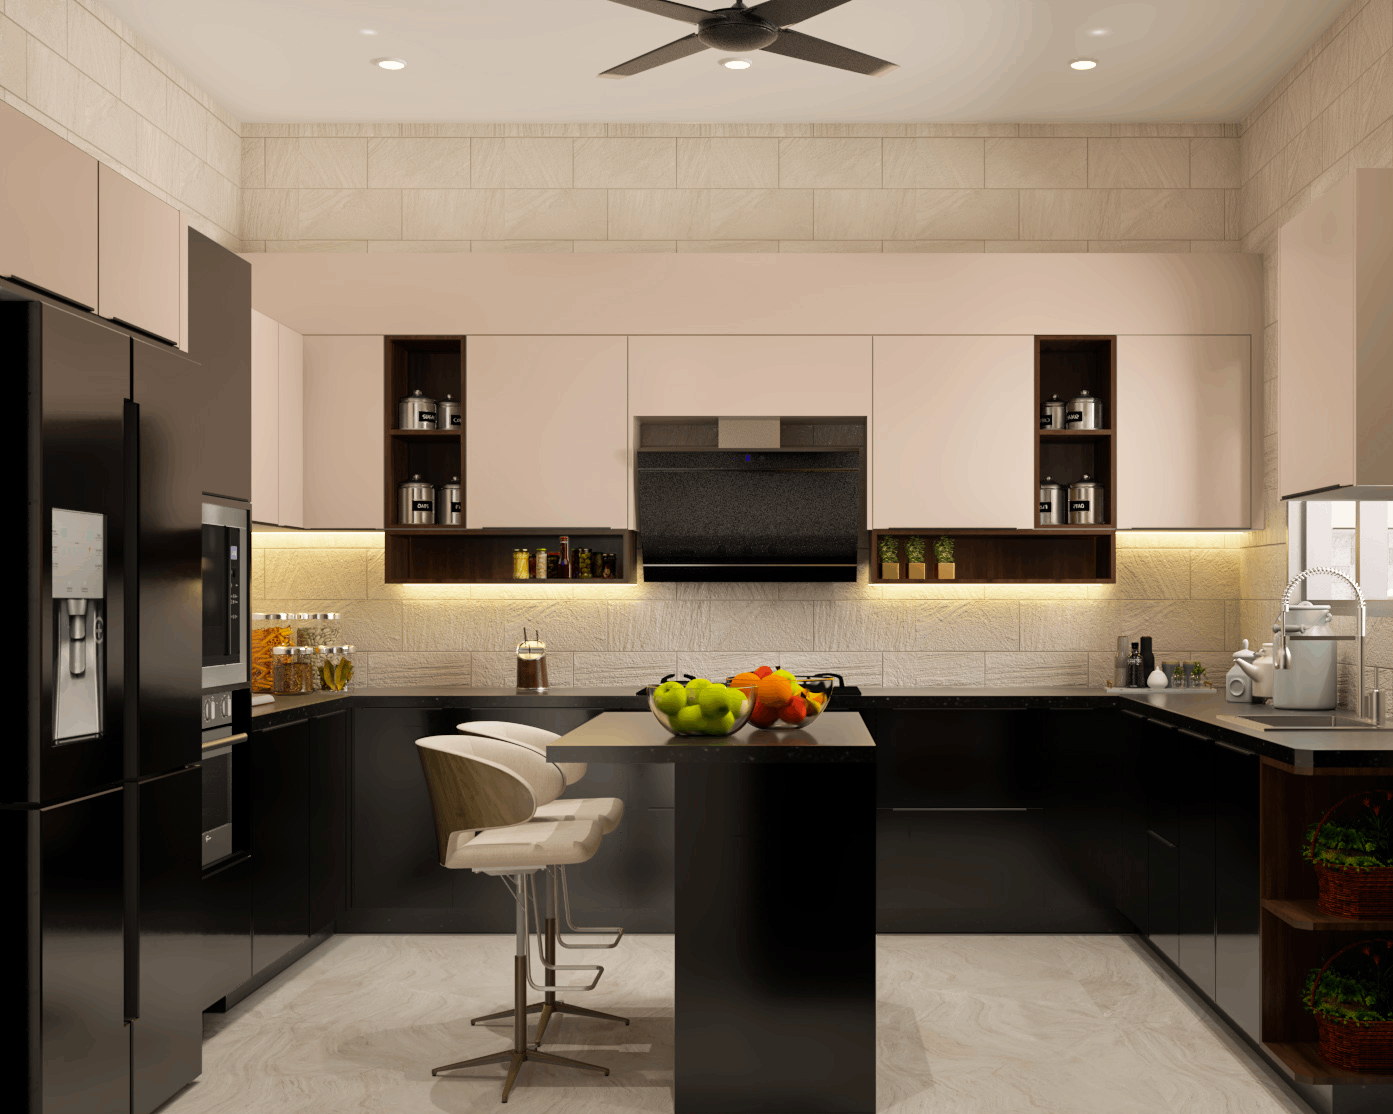 Modular U-Shaped Kitchen Design In Black And White